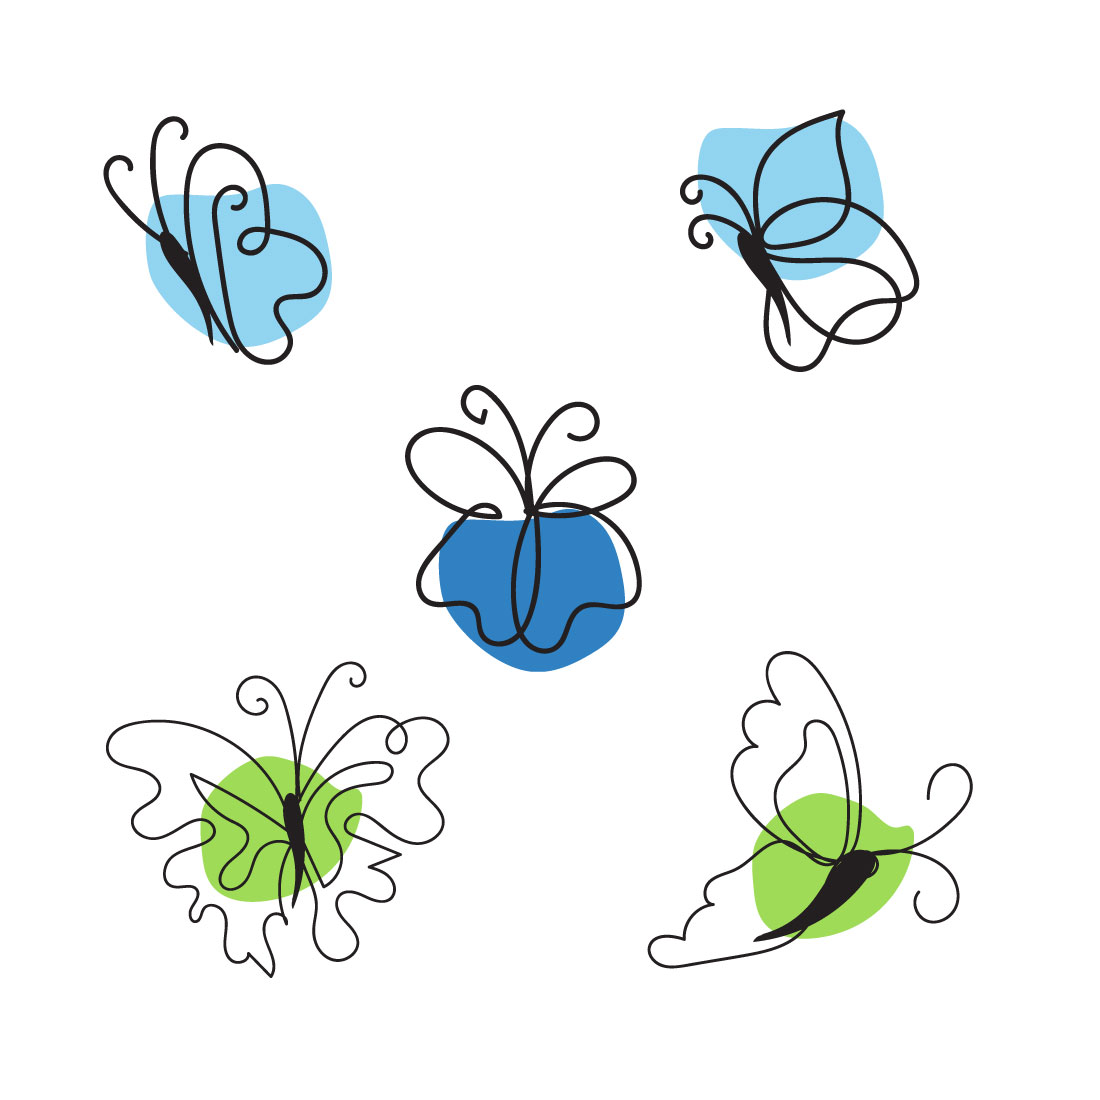 Blue Black Butterfly Mini Planner Stickers